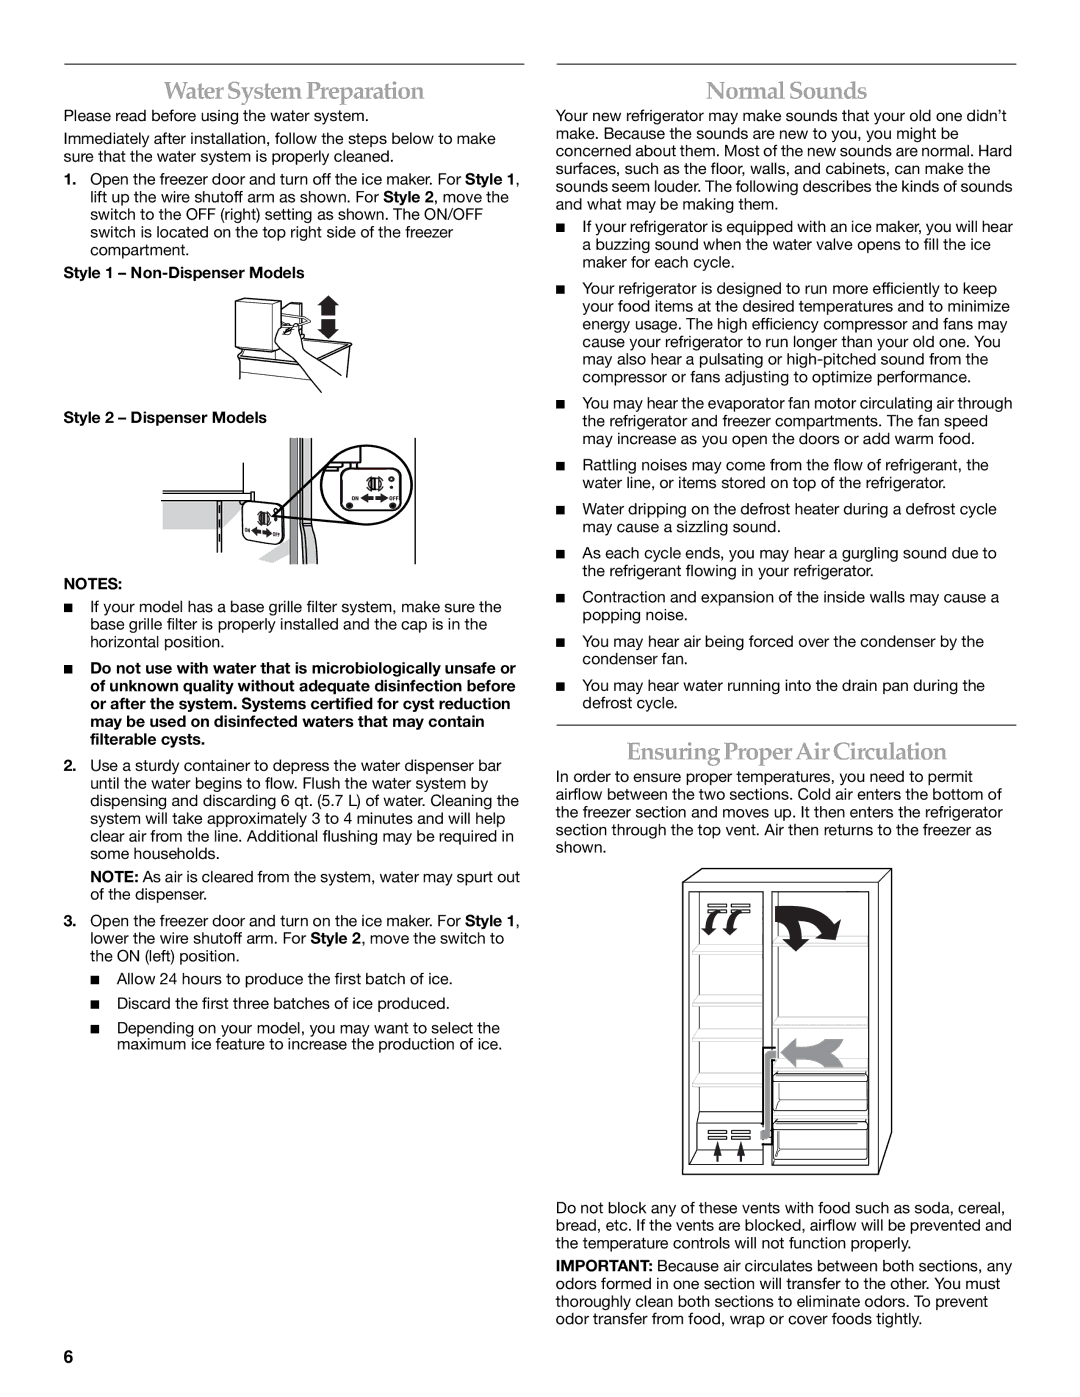 KitchenAid BUILT-IN REFRIGERATOR manual Water System Preparation, Normal Sounds, Ensuring Proper Air Circulation 